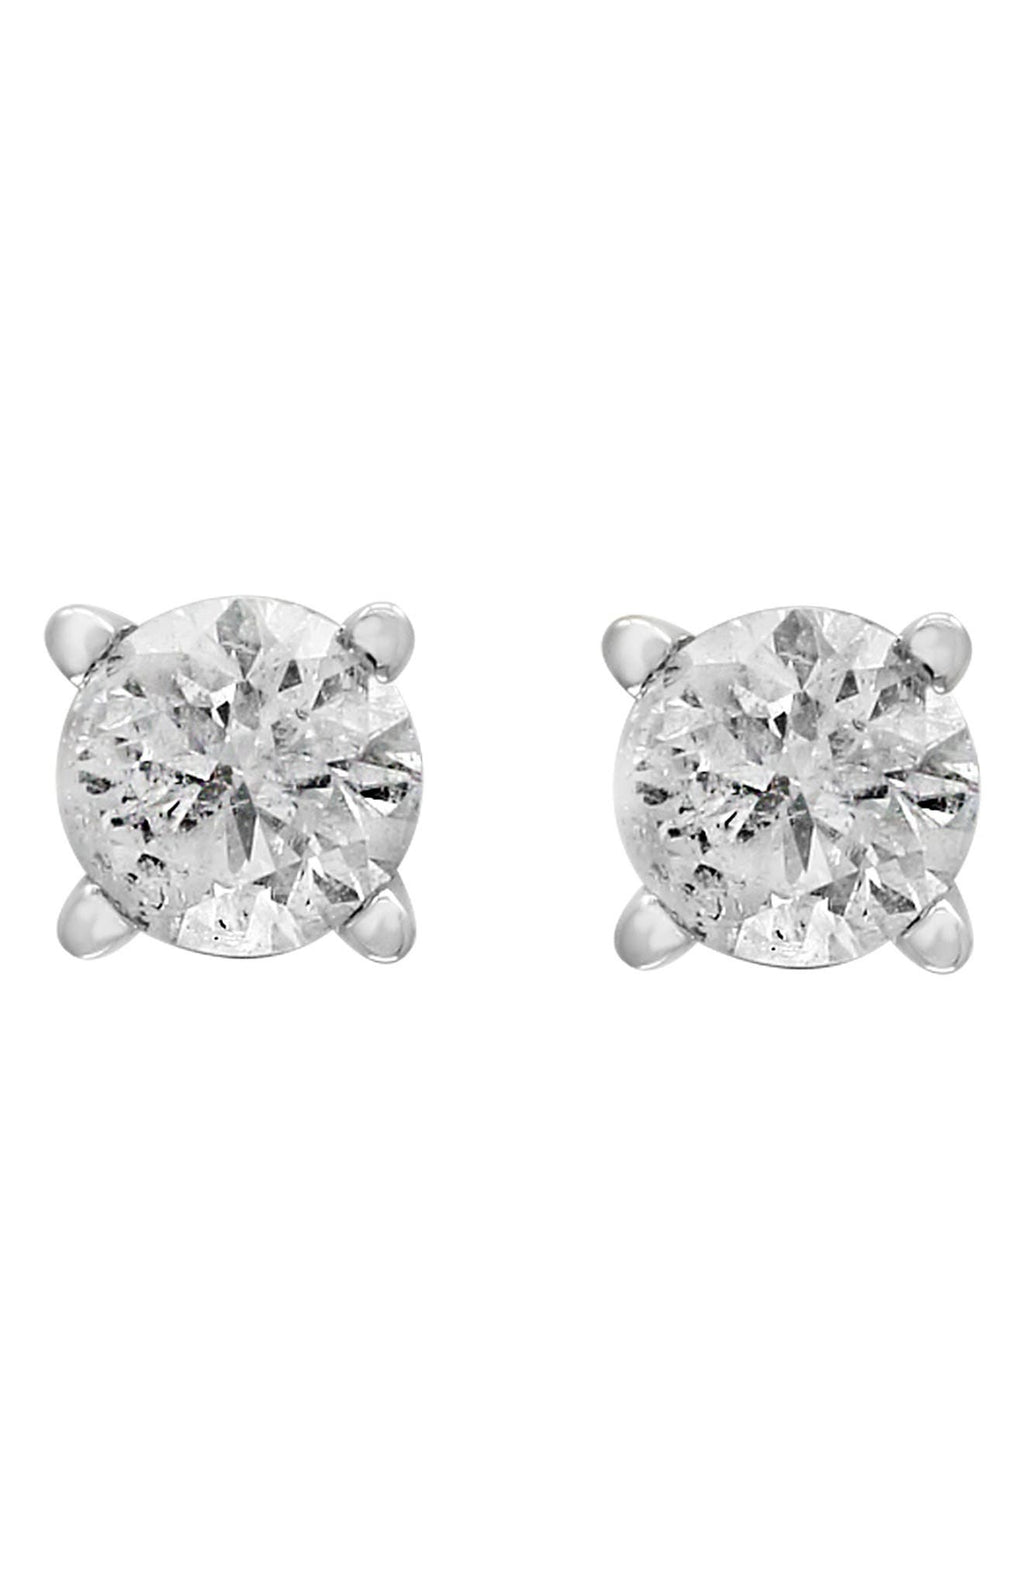 EFFY 14K White Gold Round Diamond Stud Earrings - 0.25 ctw., Main, color, WHITE